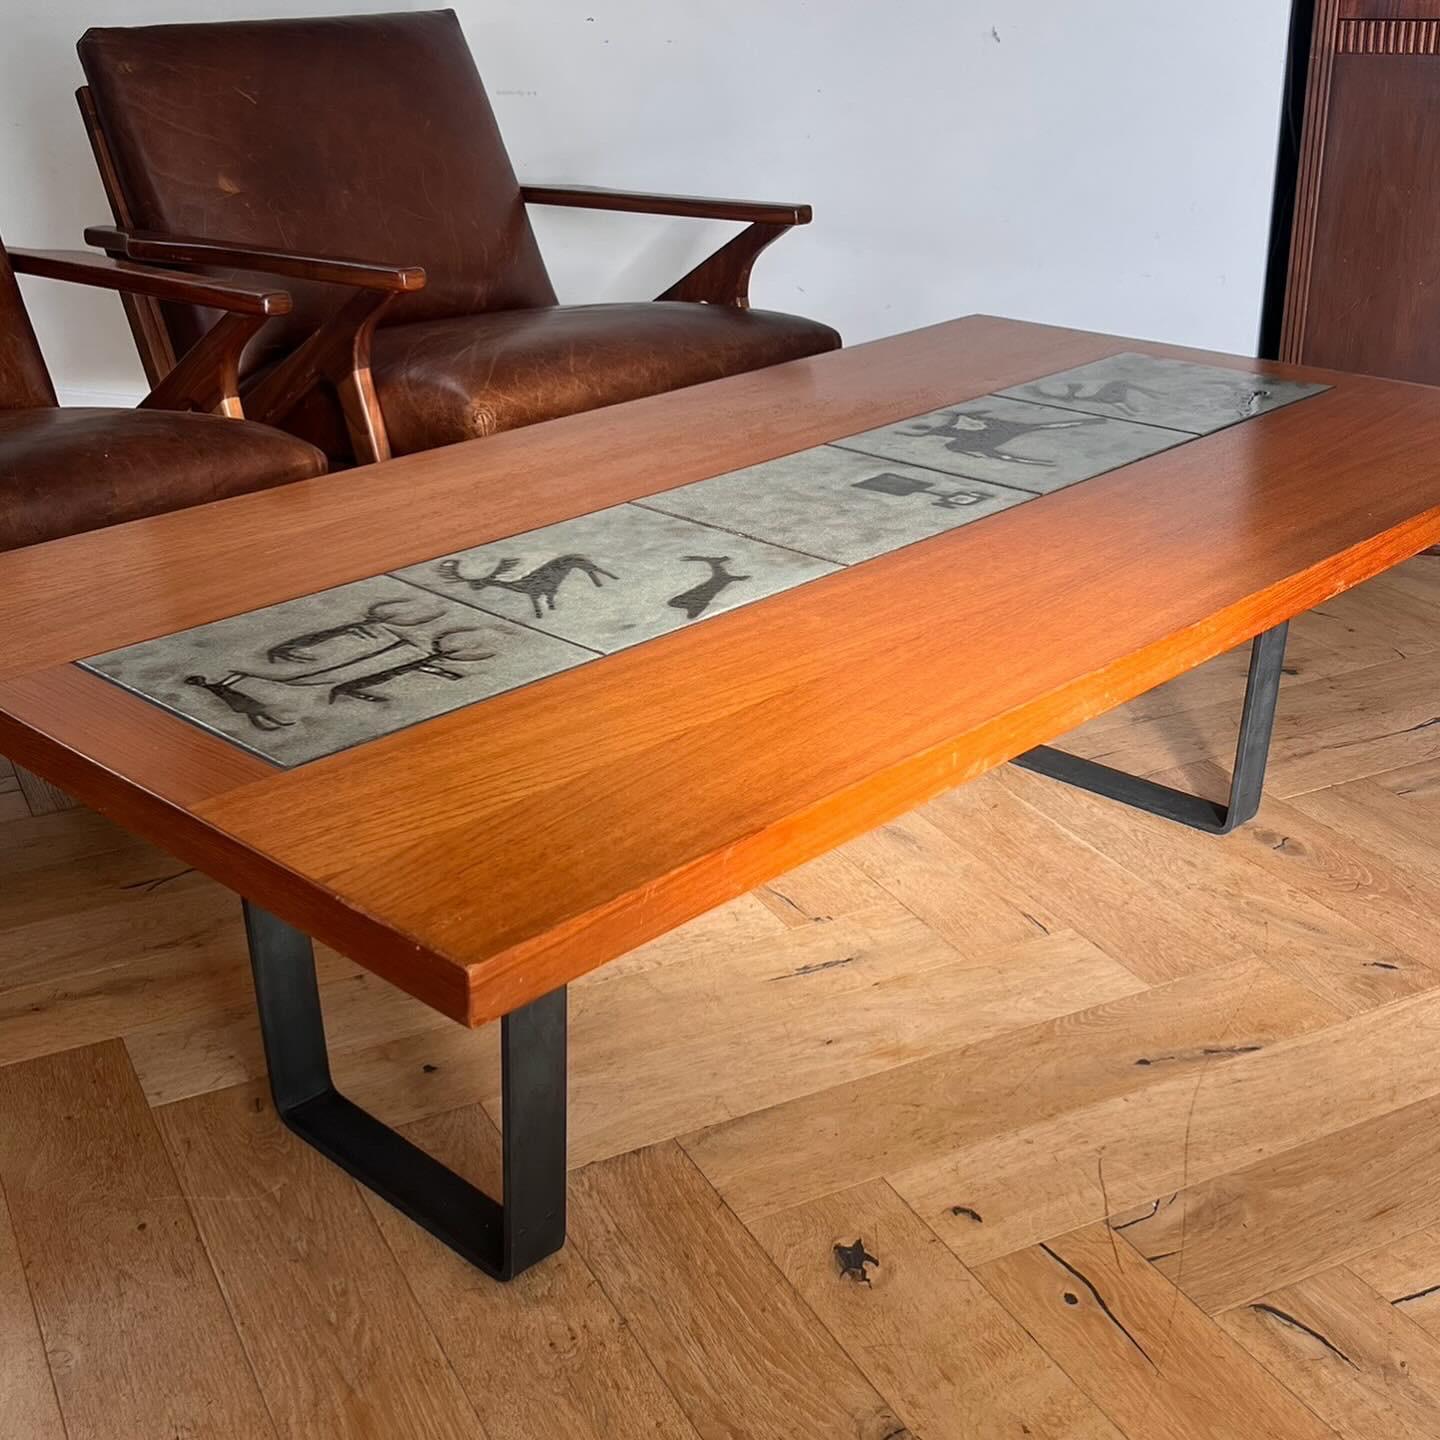 Danish modern teak coffee table with prehistoric tile inlay, 1960s For Sale 3